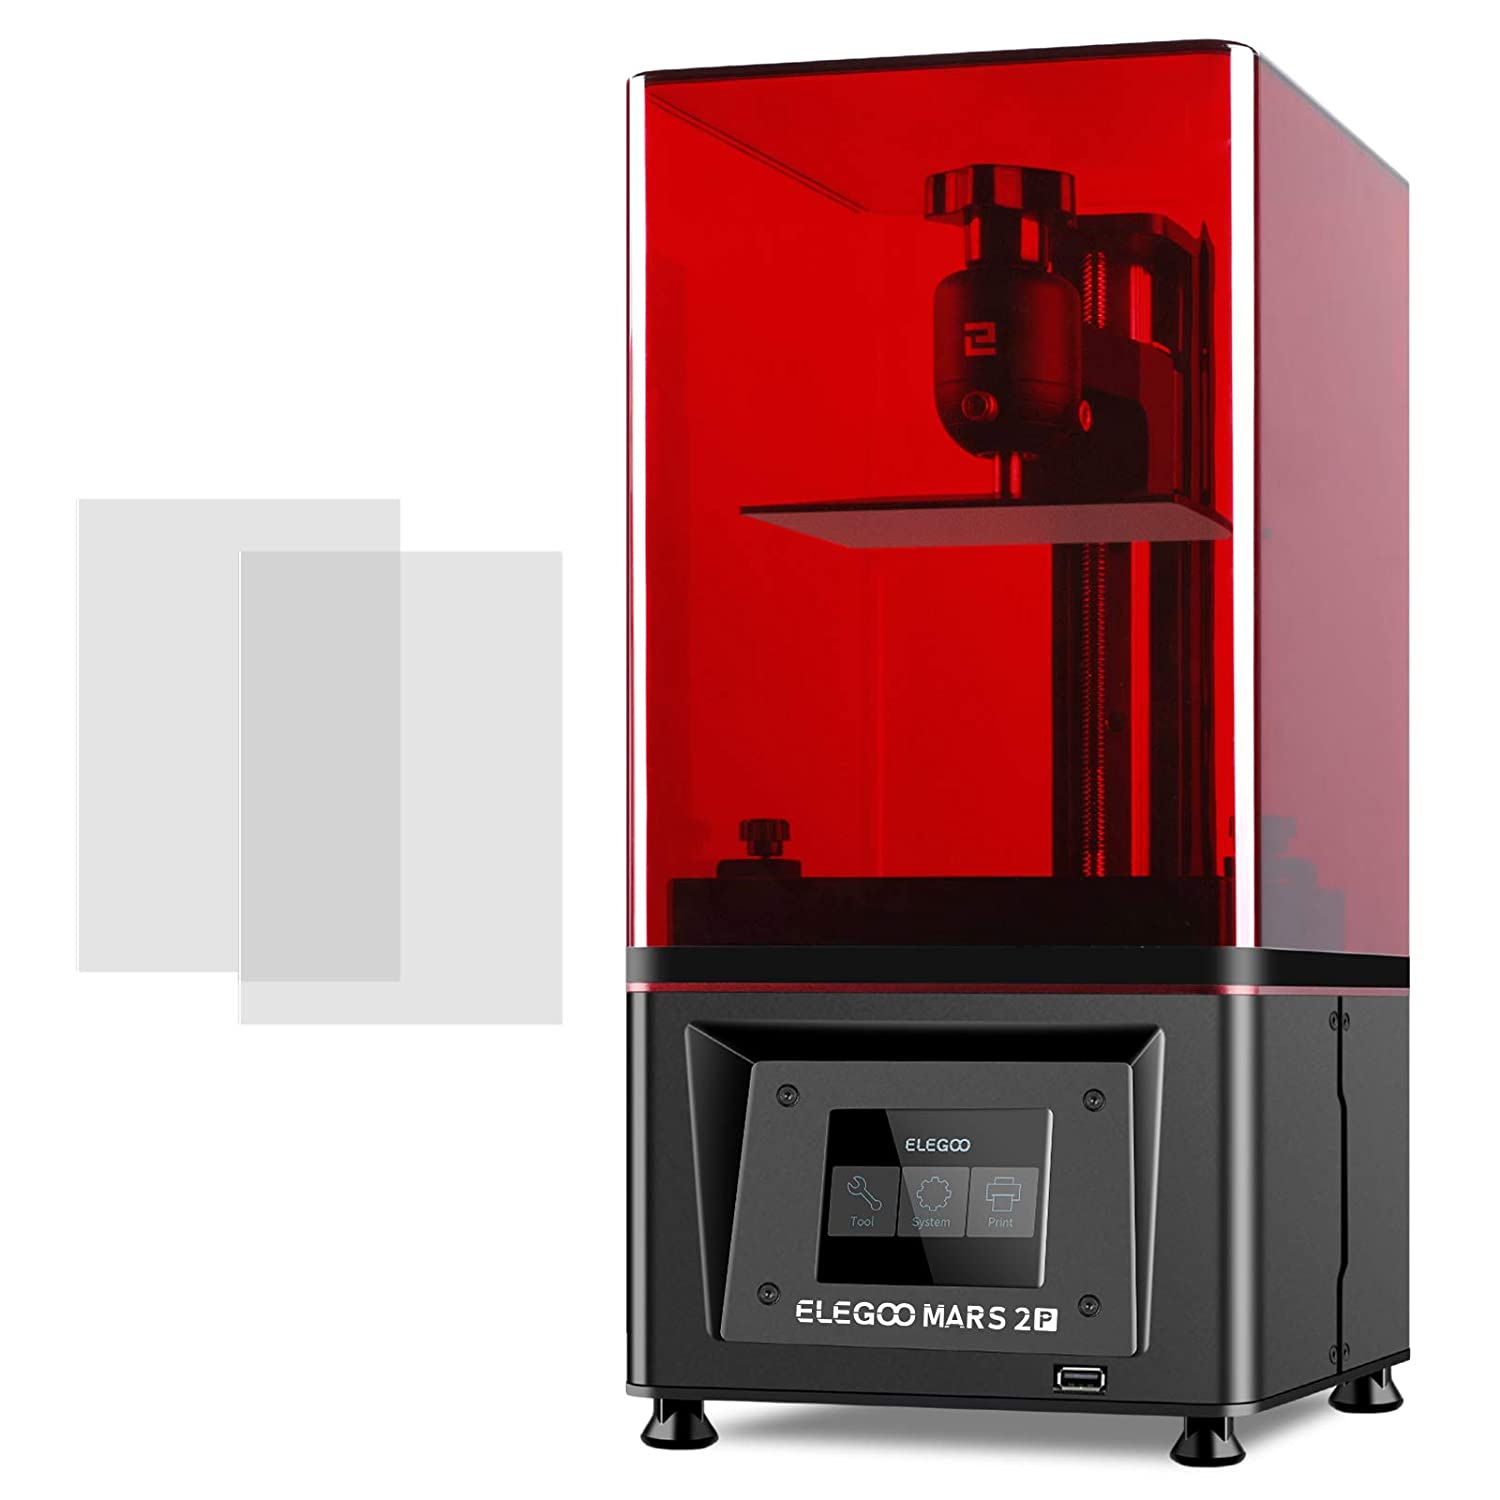 Elegoo Mars 2 Pro 3D Printer MSLA @ Amazon $200.99